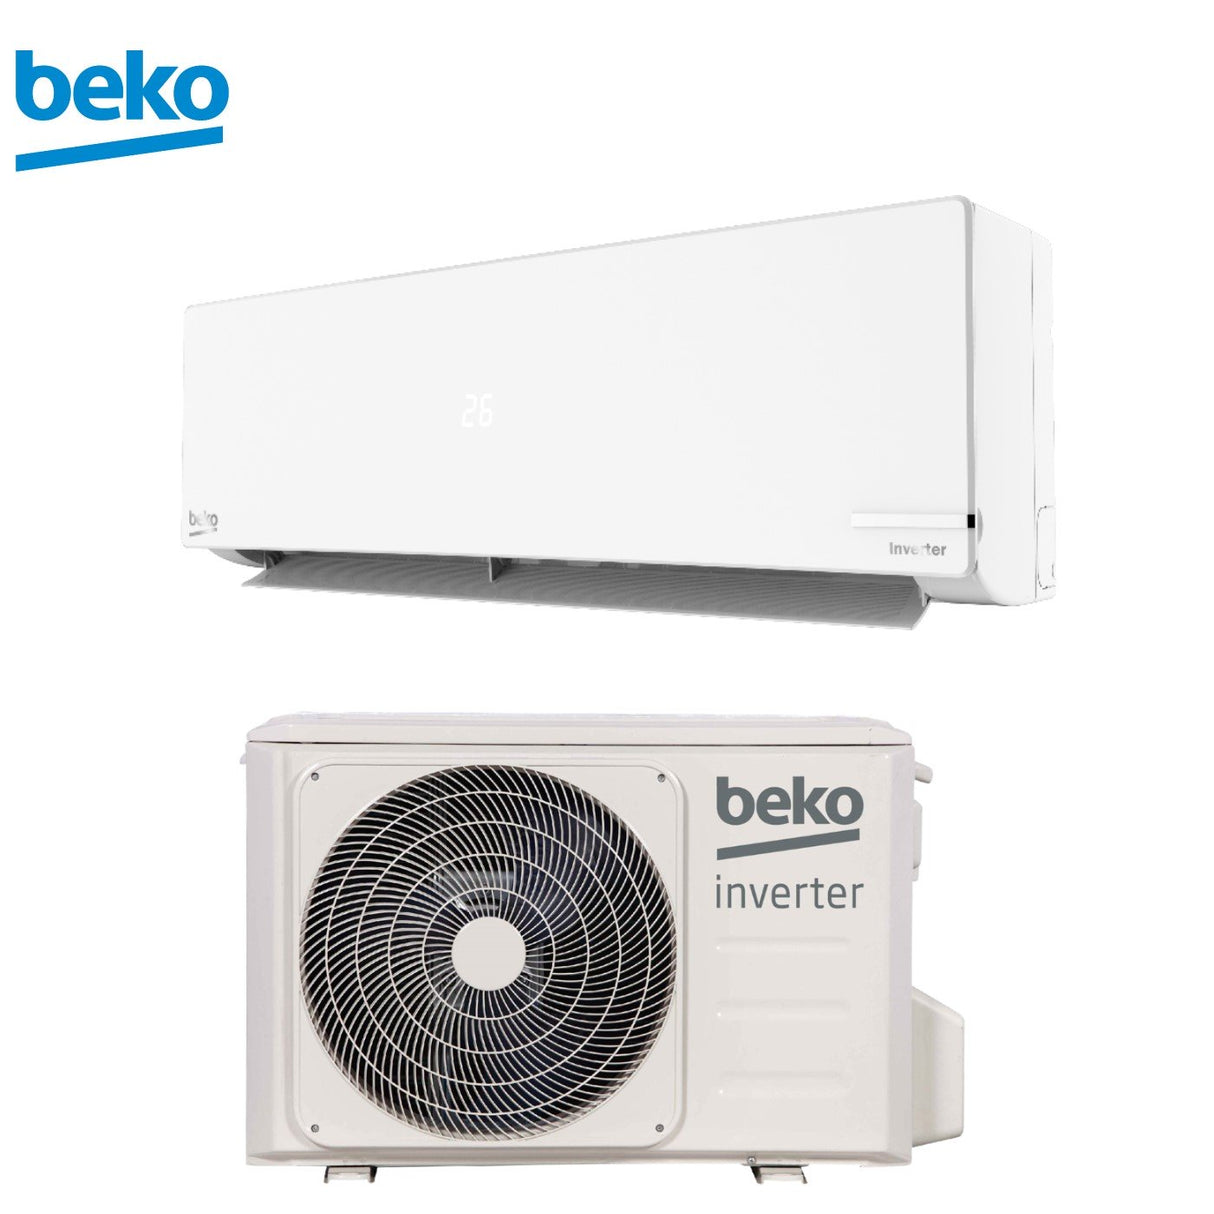 immagine-2-beko-climatizzatore-condizionatore-beko-inverter-12000-btu-beupc120-beupc121-r-32-classe-aa-ean-8059657002792